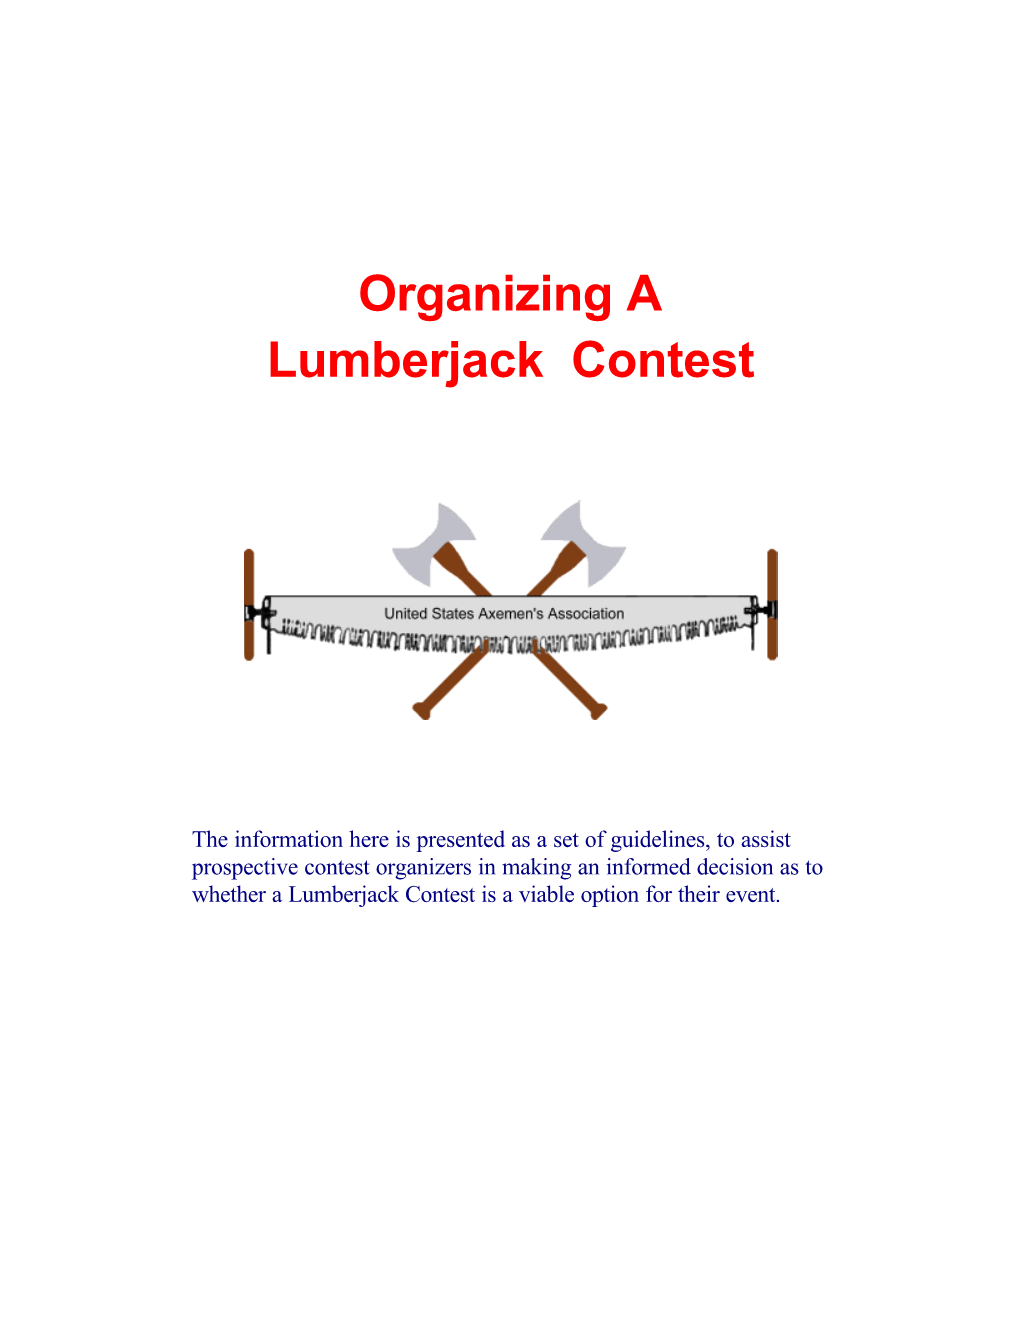 Organizing a Lumberjack Contest